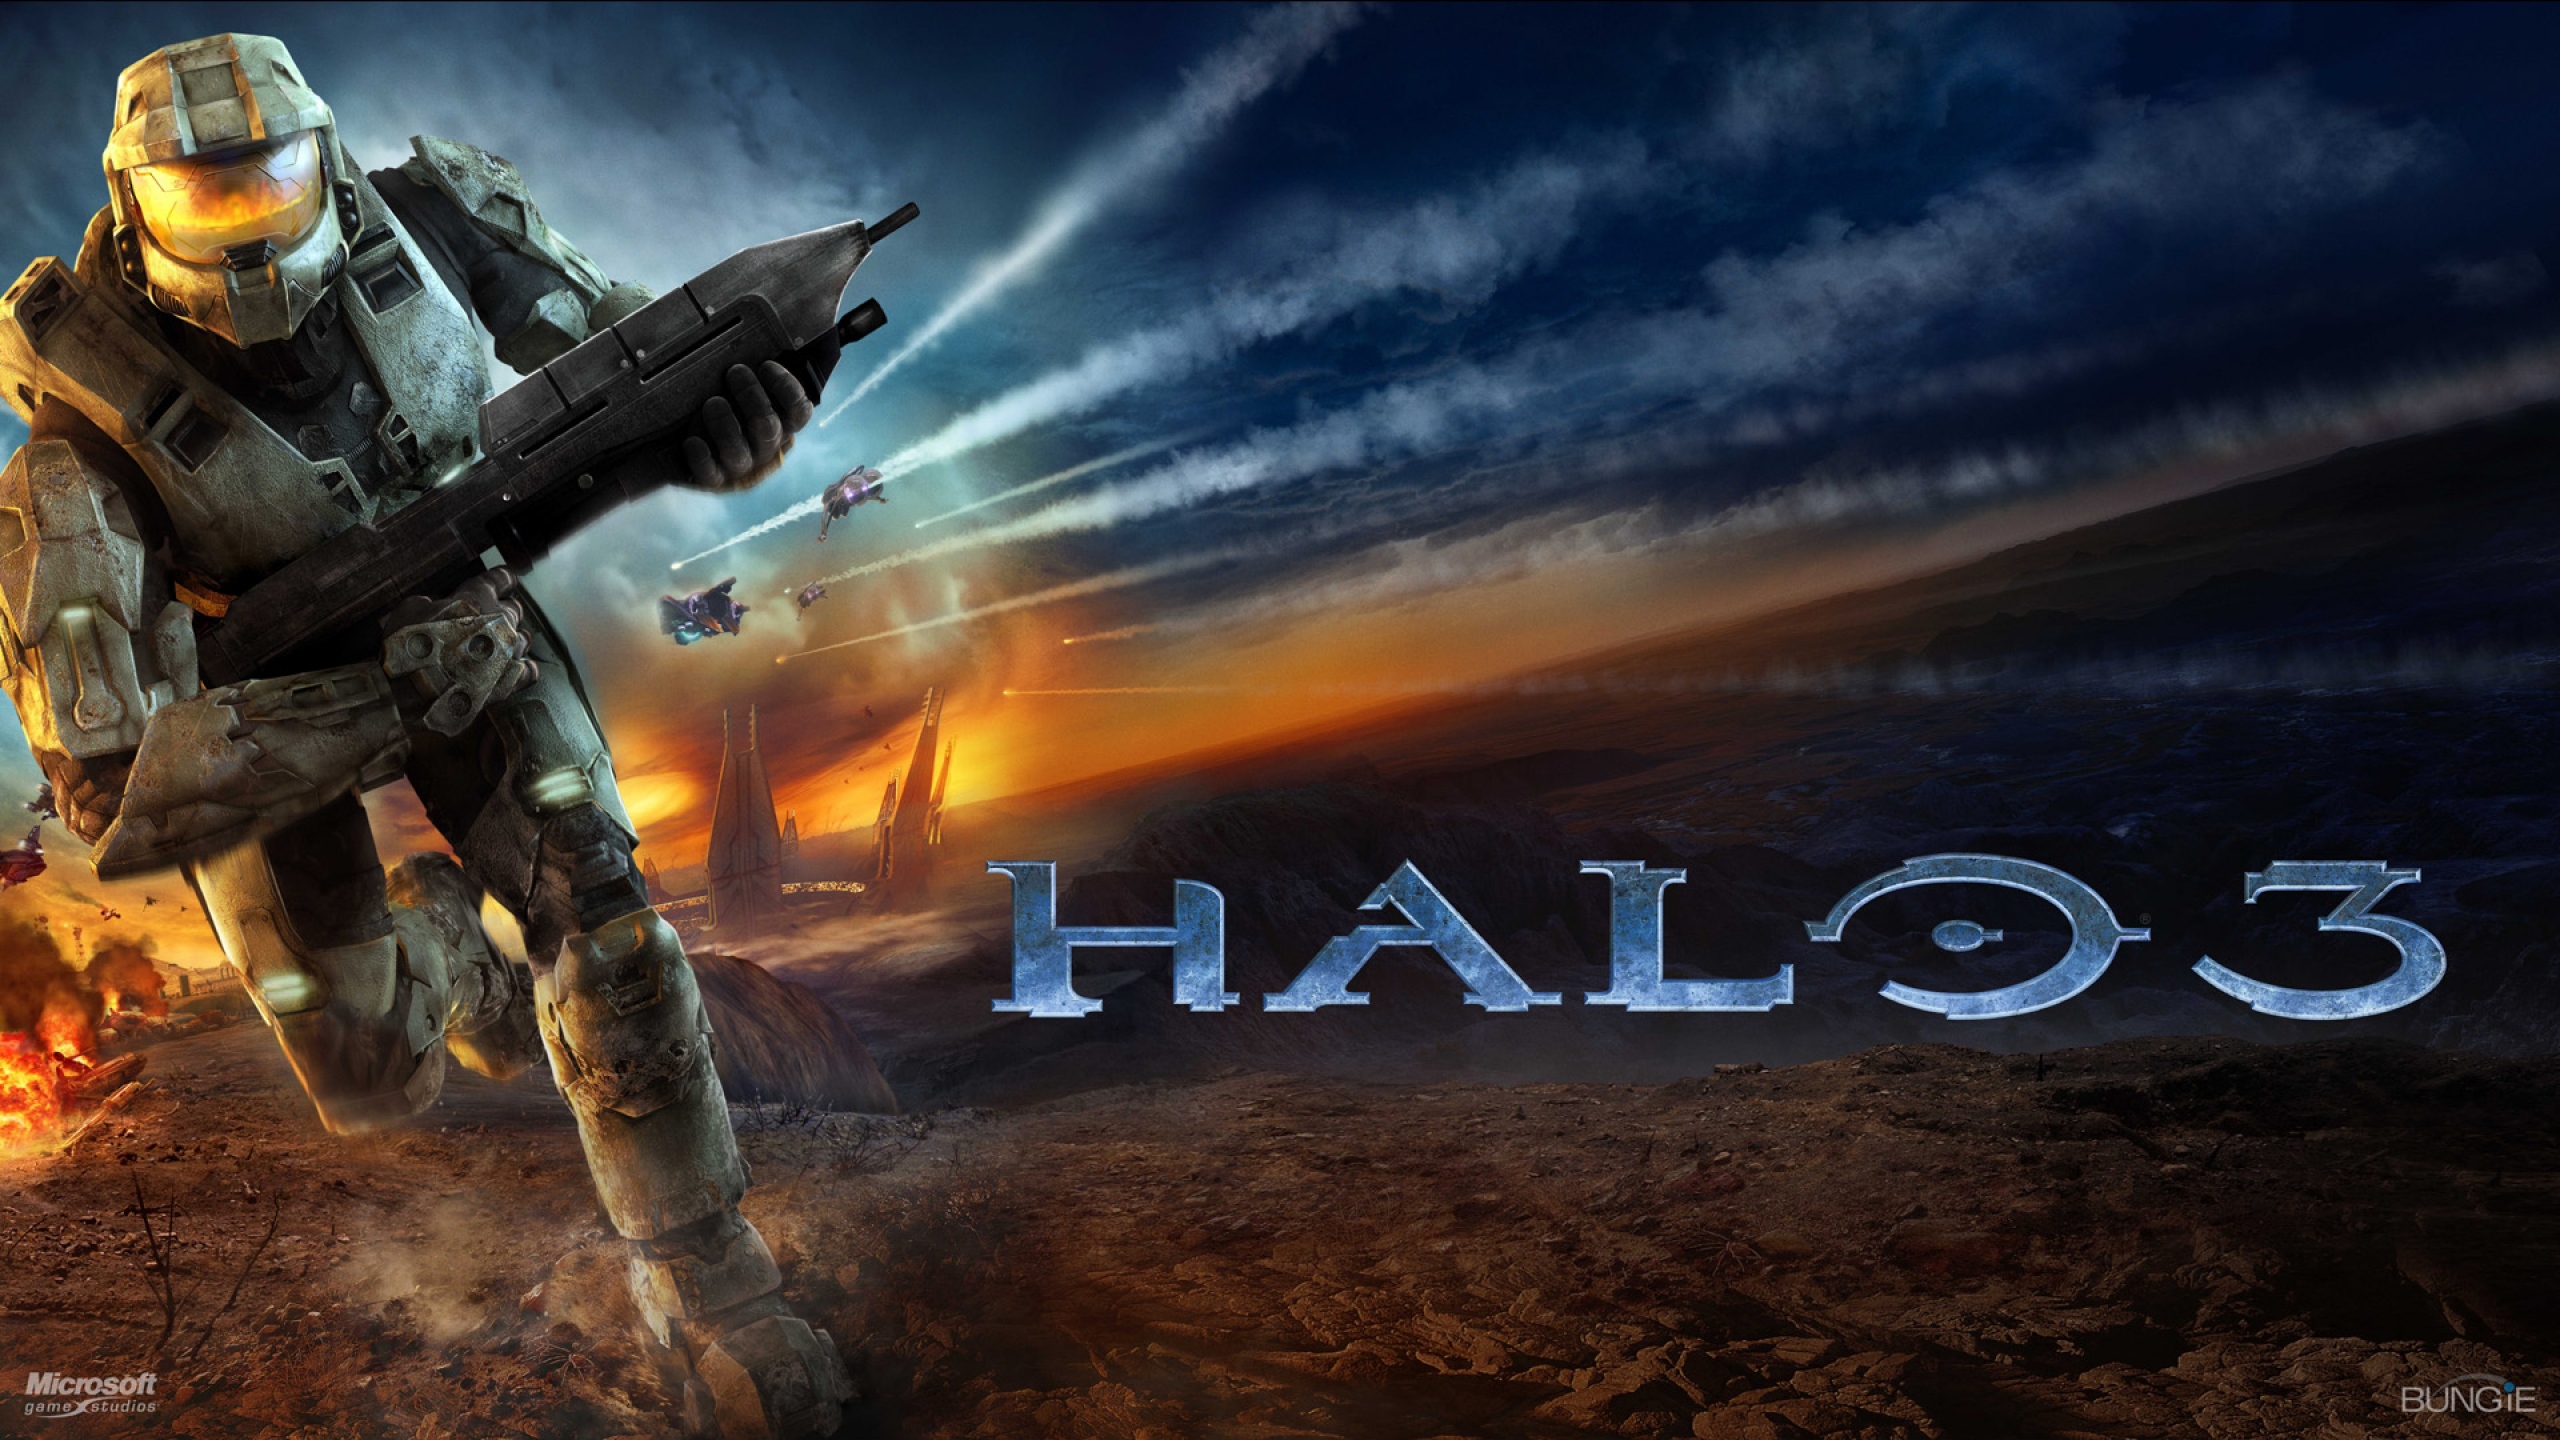 Wallpaper Halo Soldier Run Sky Explosion Mac